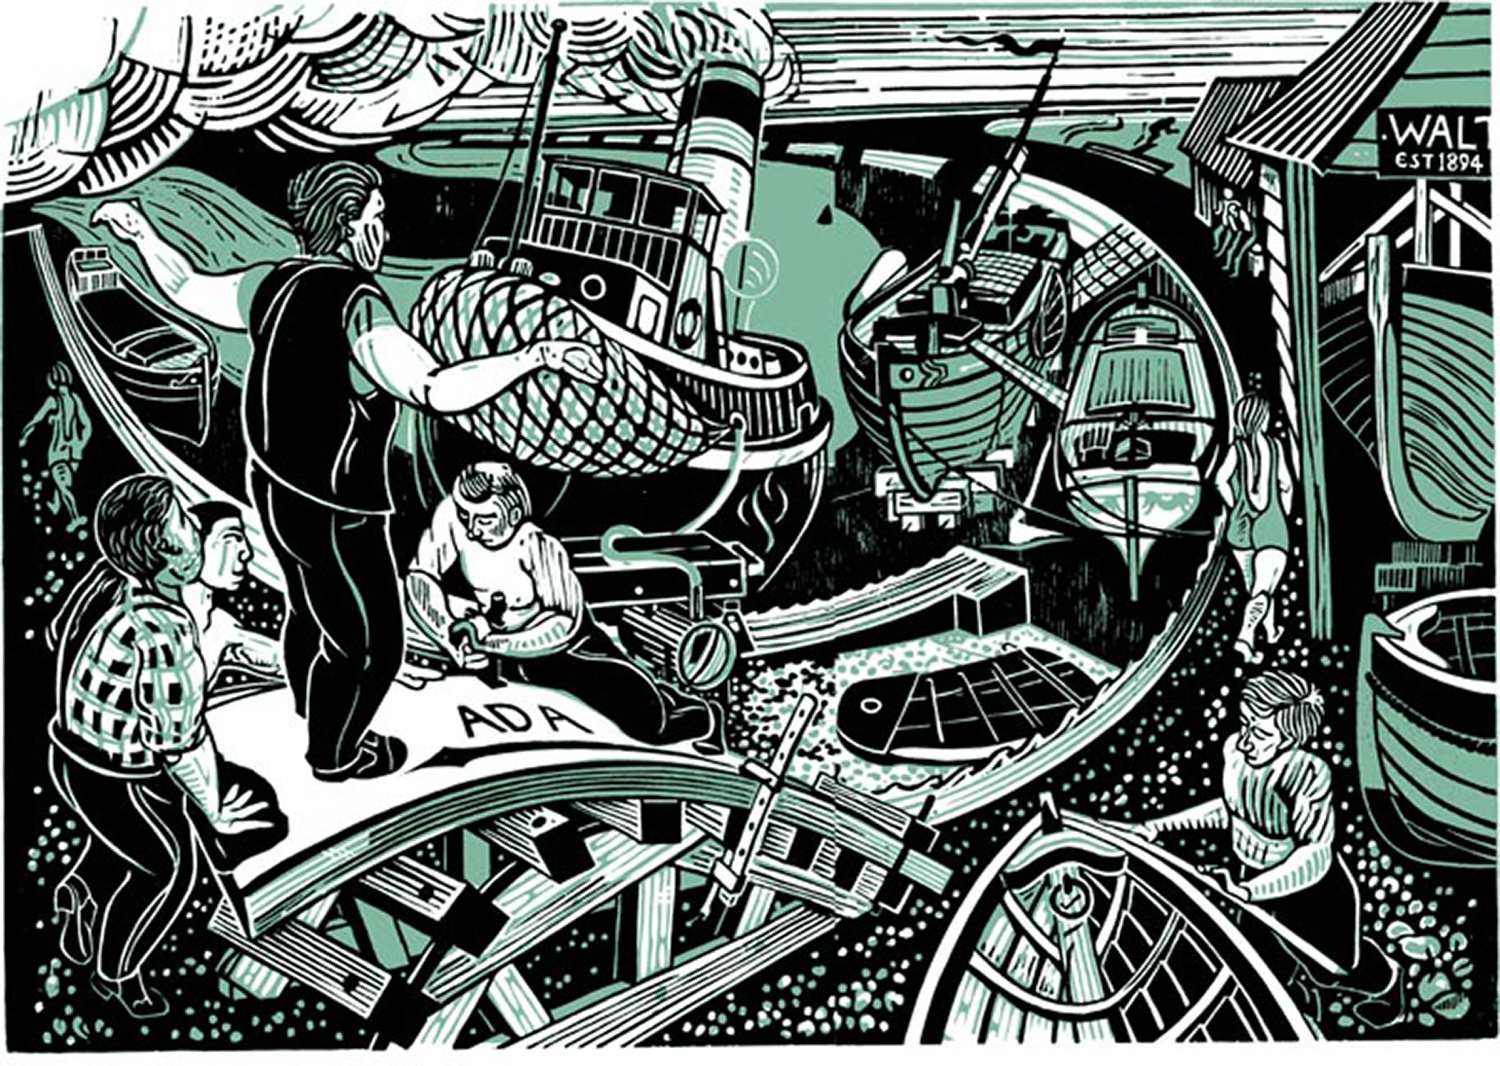 Maldon Shipwrights by James Dodds